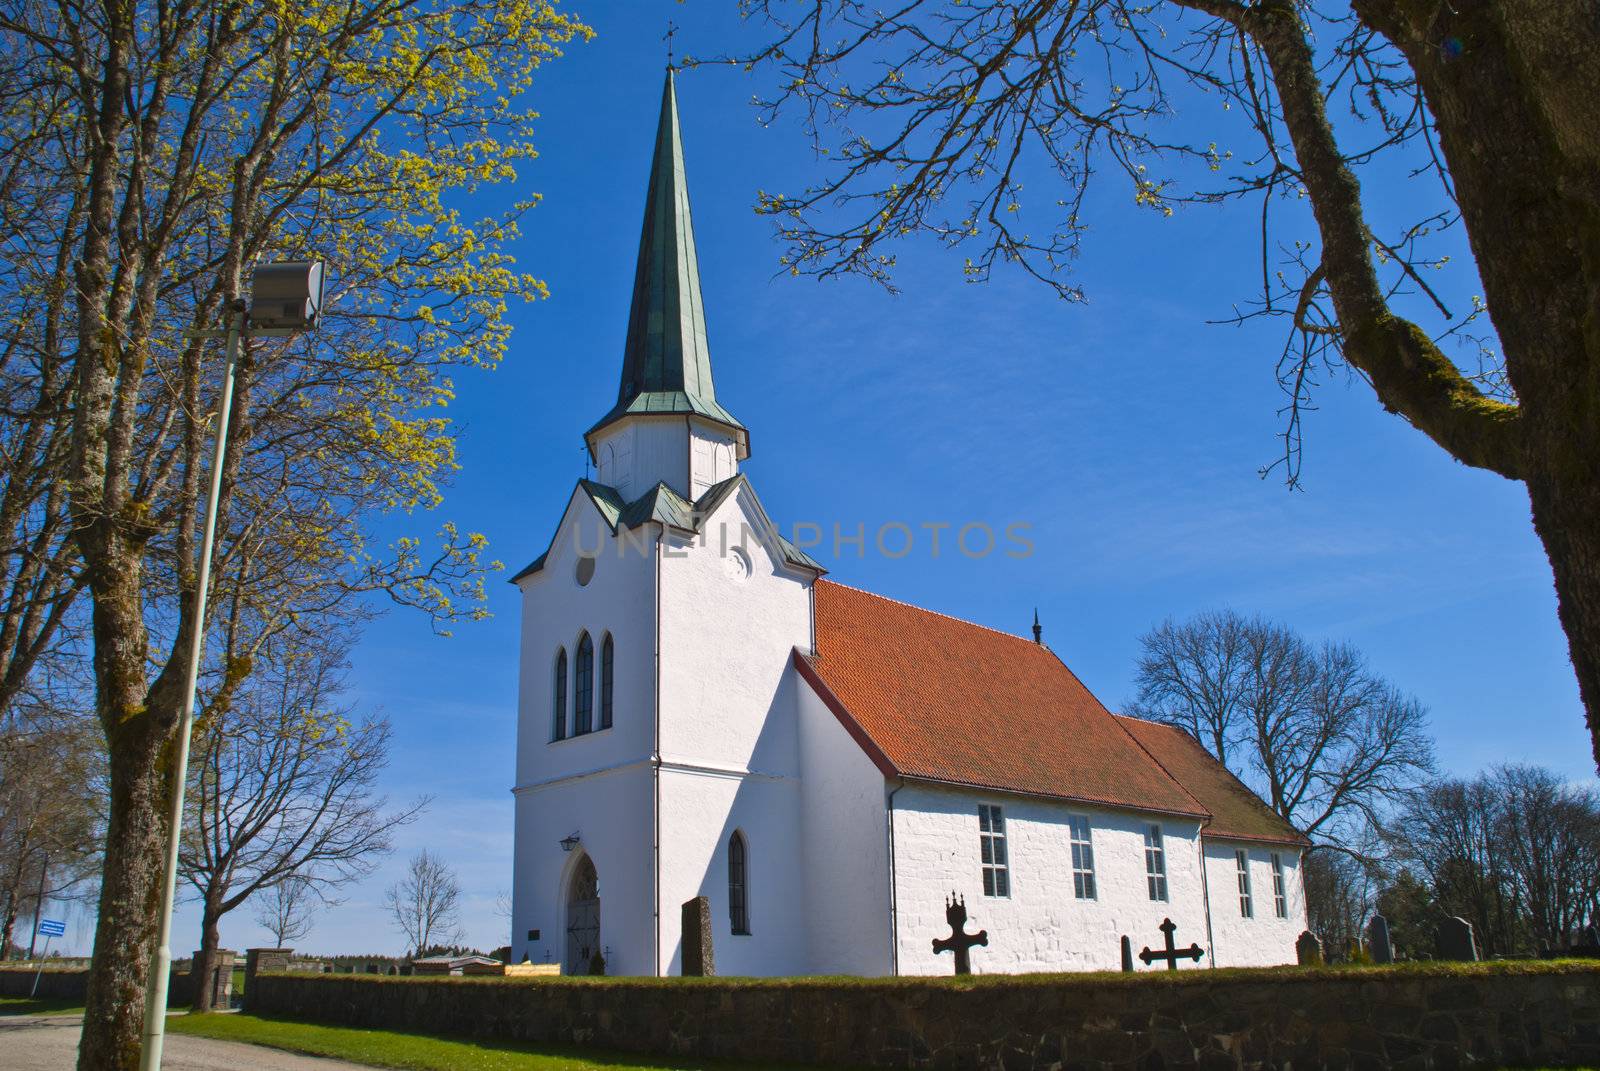 Rakkestad church by steirus